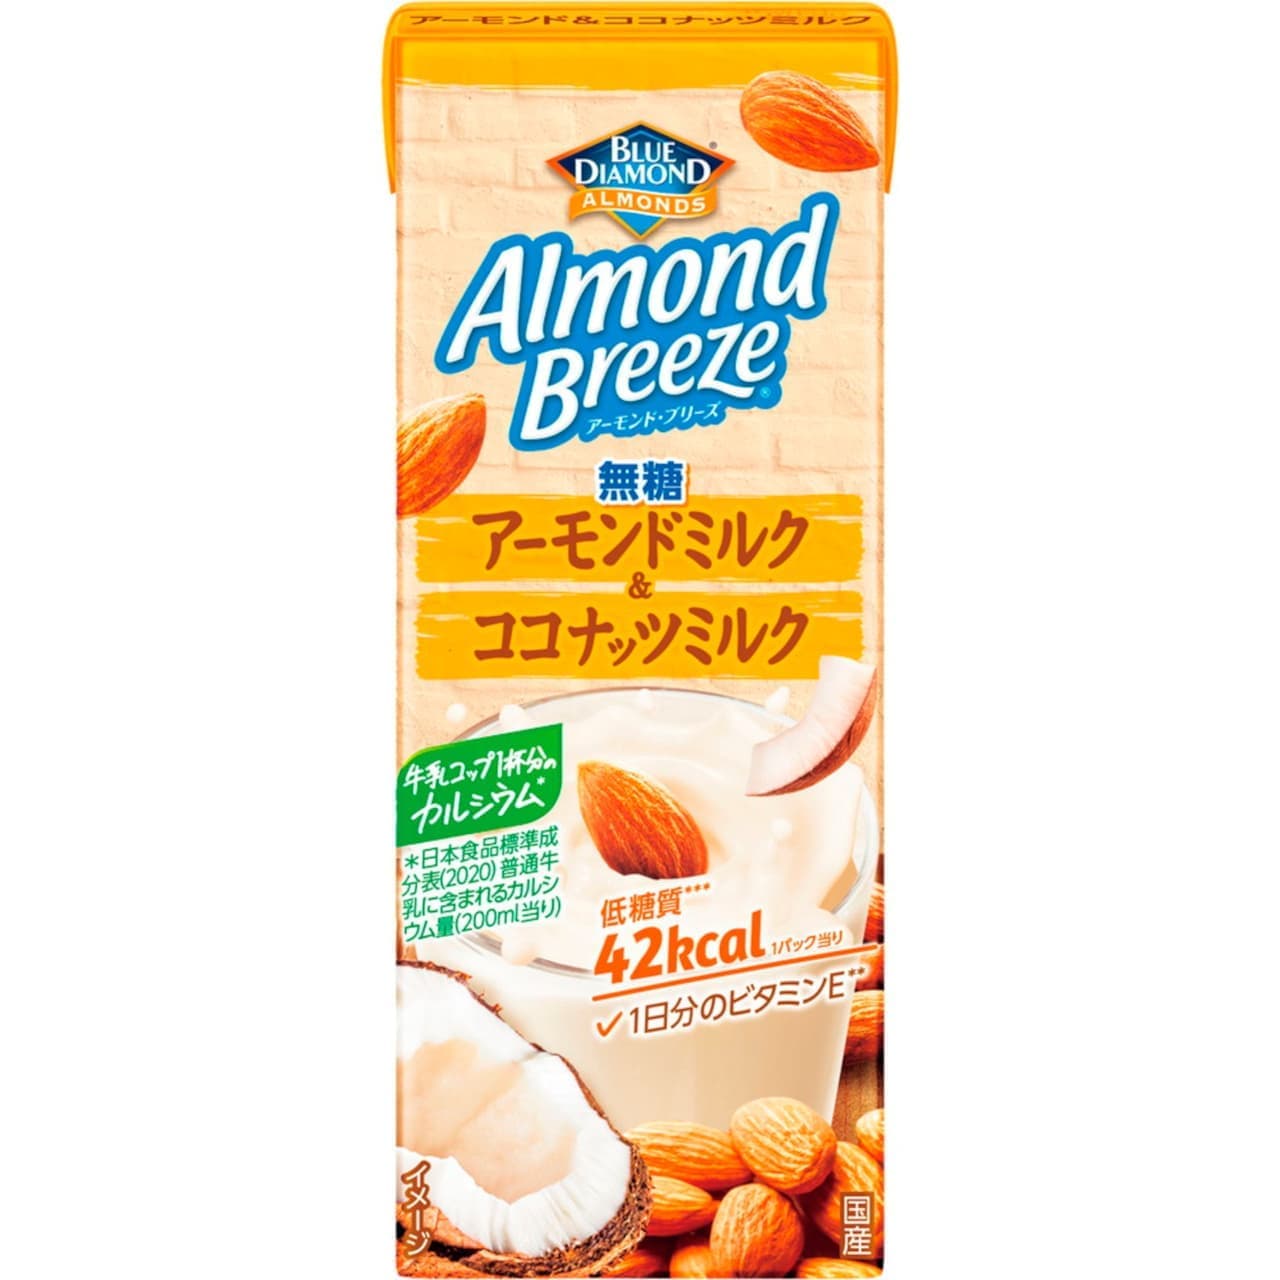 Pokka Sapporo "Almond Breeze Almond Milk & Coconut Milk Unsweetened".